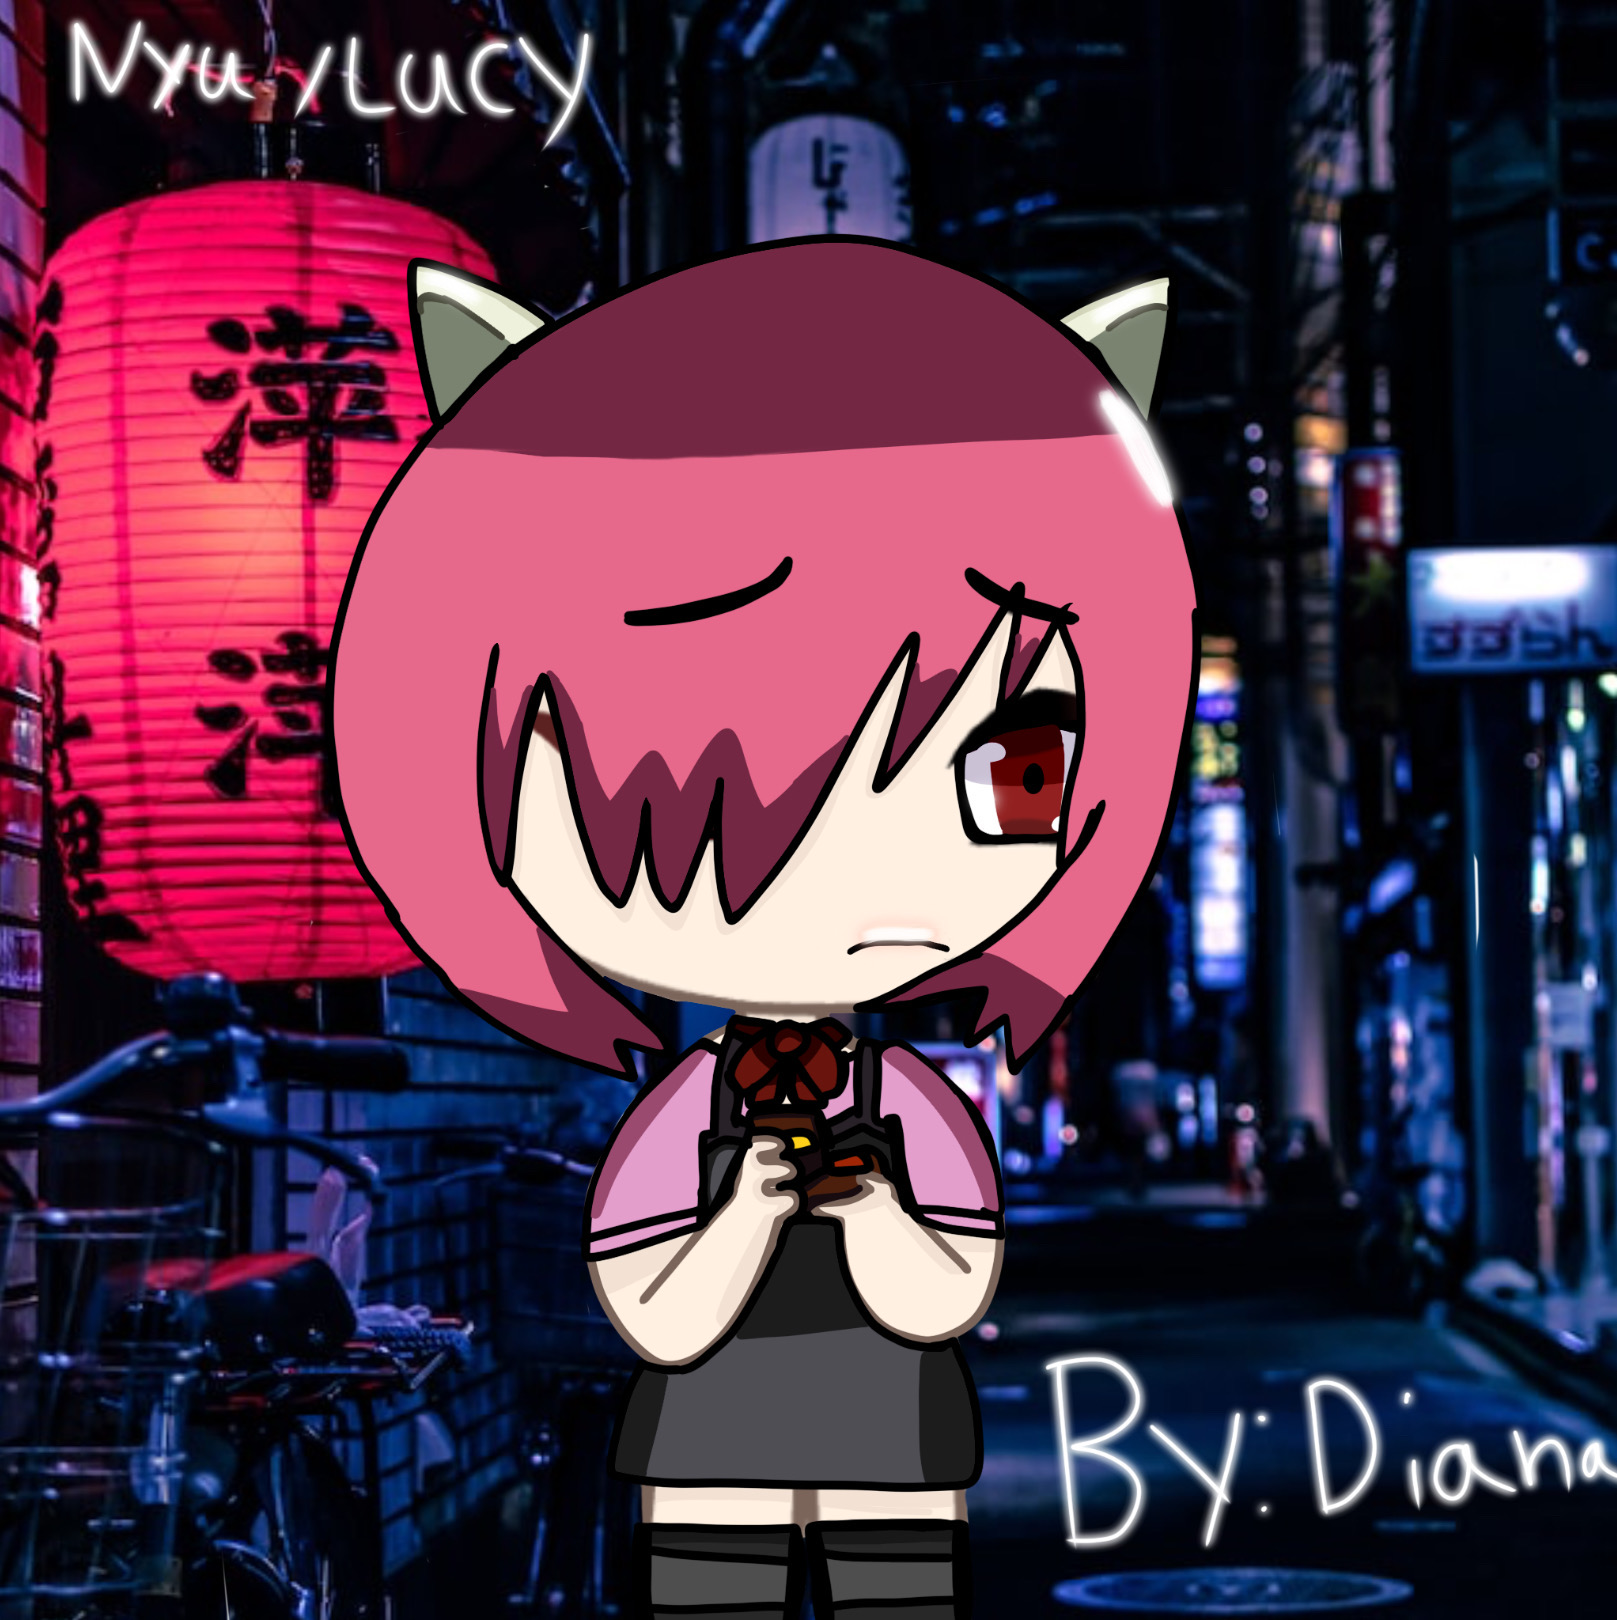 Nyu/ Lucy gacha edit by Dianagachaart on DeviantArt